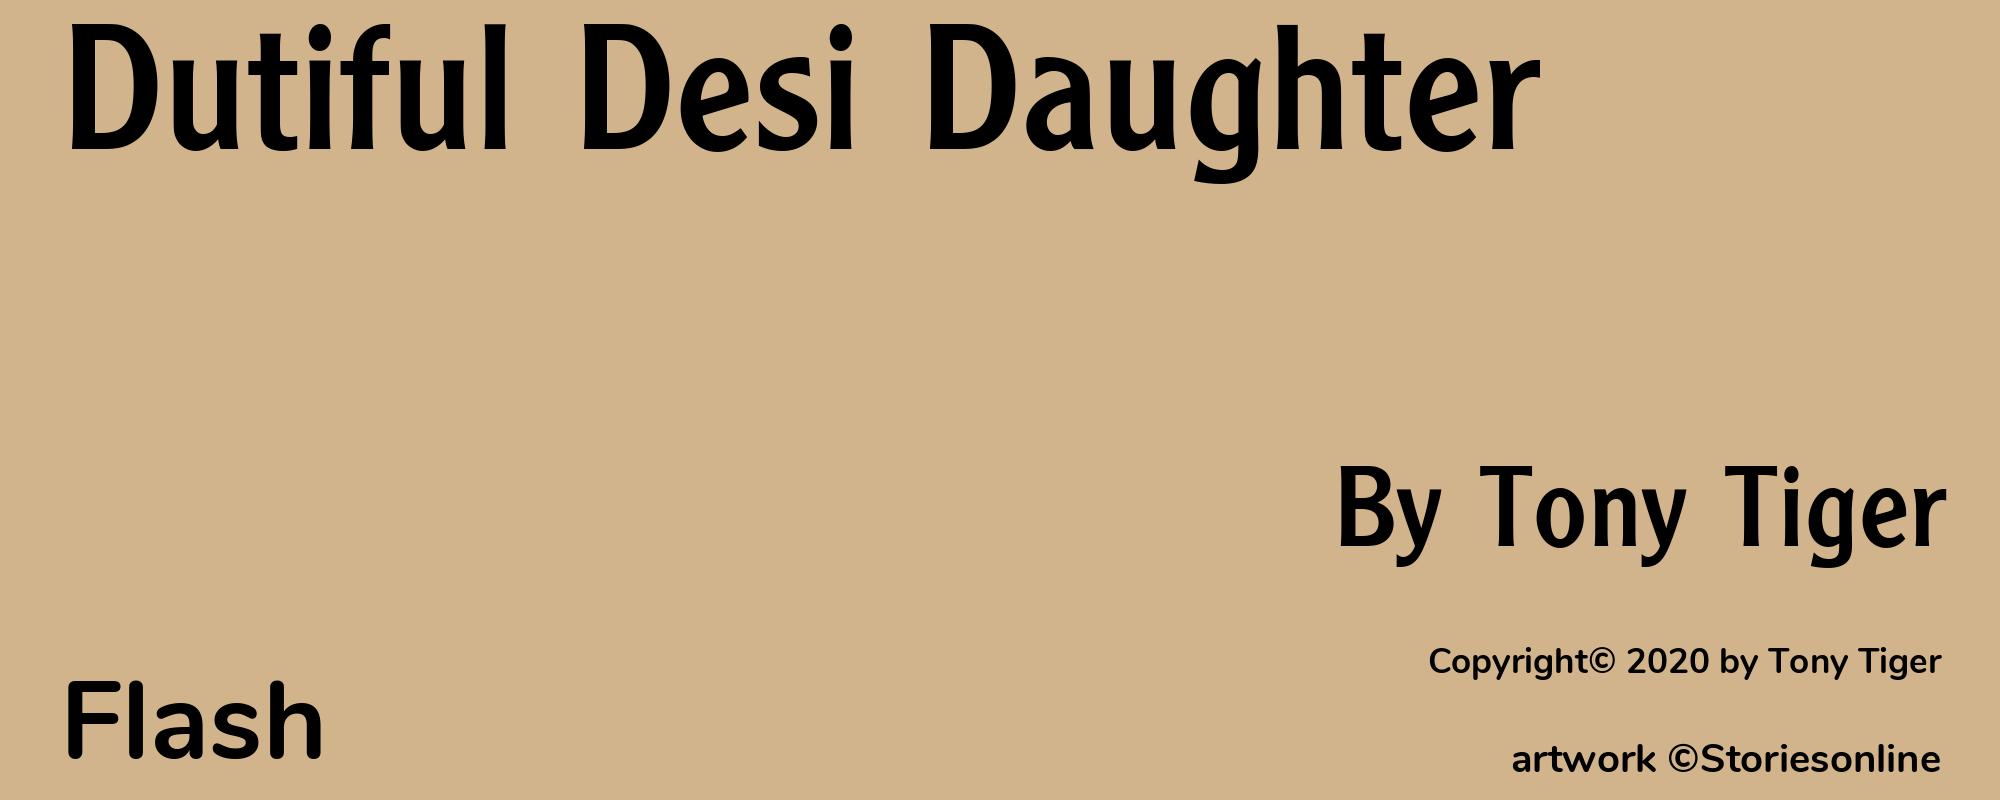 Dutiful Desi Daughter - Cover